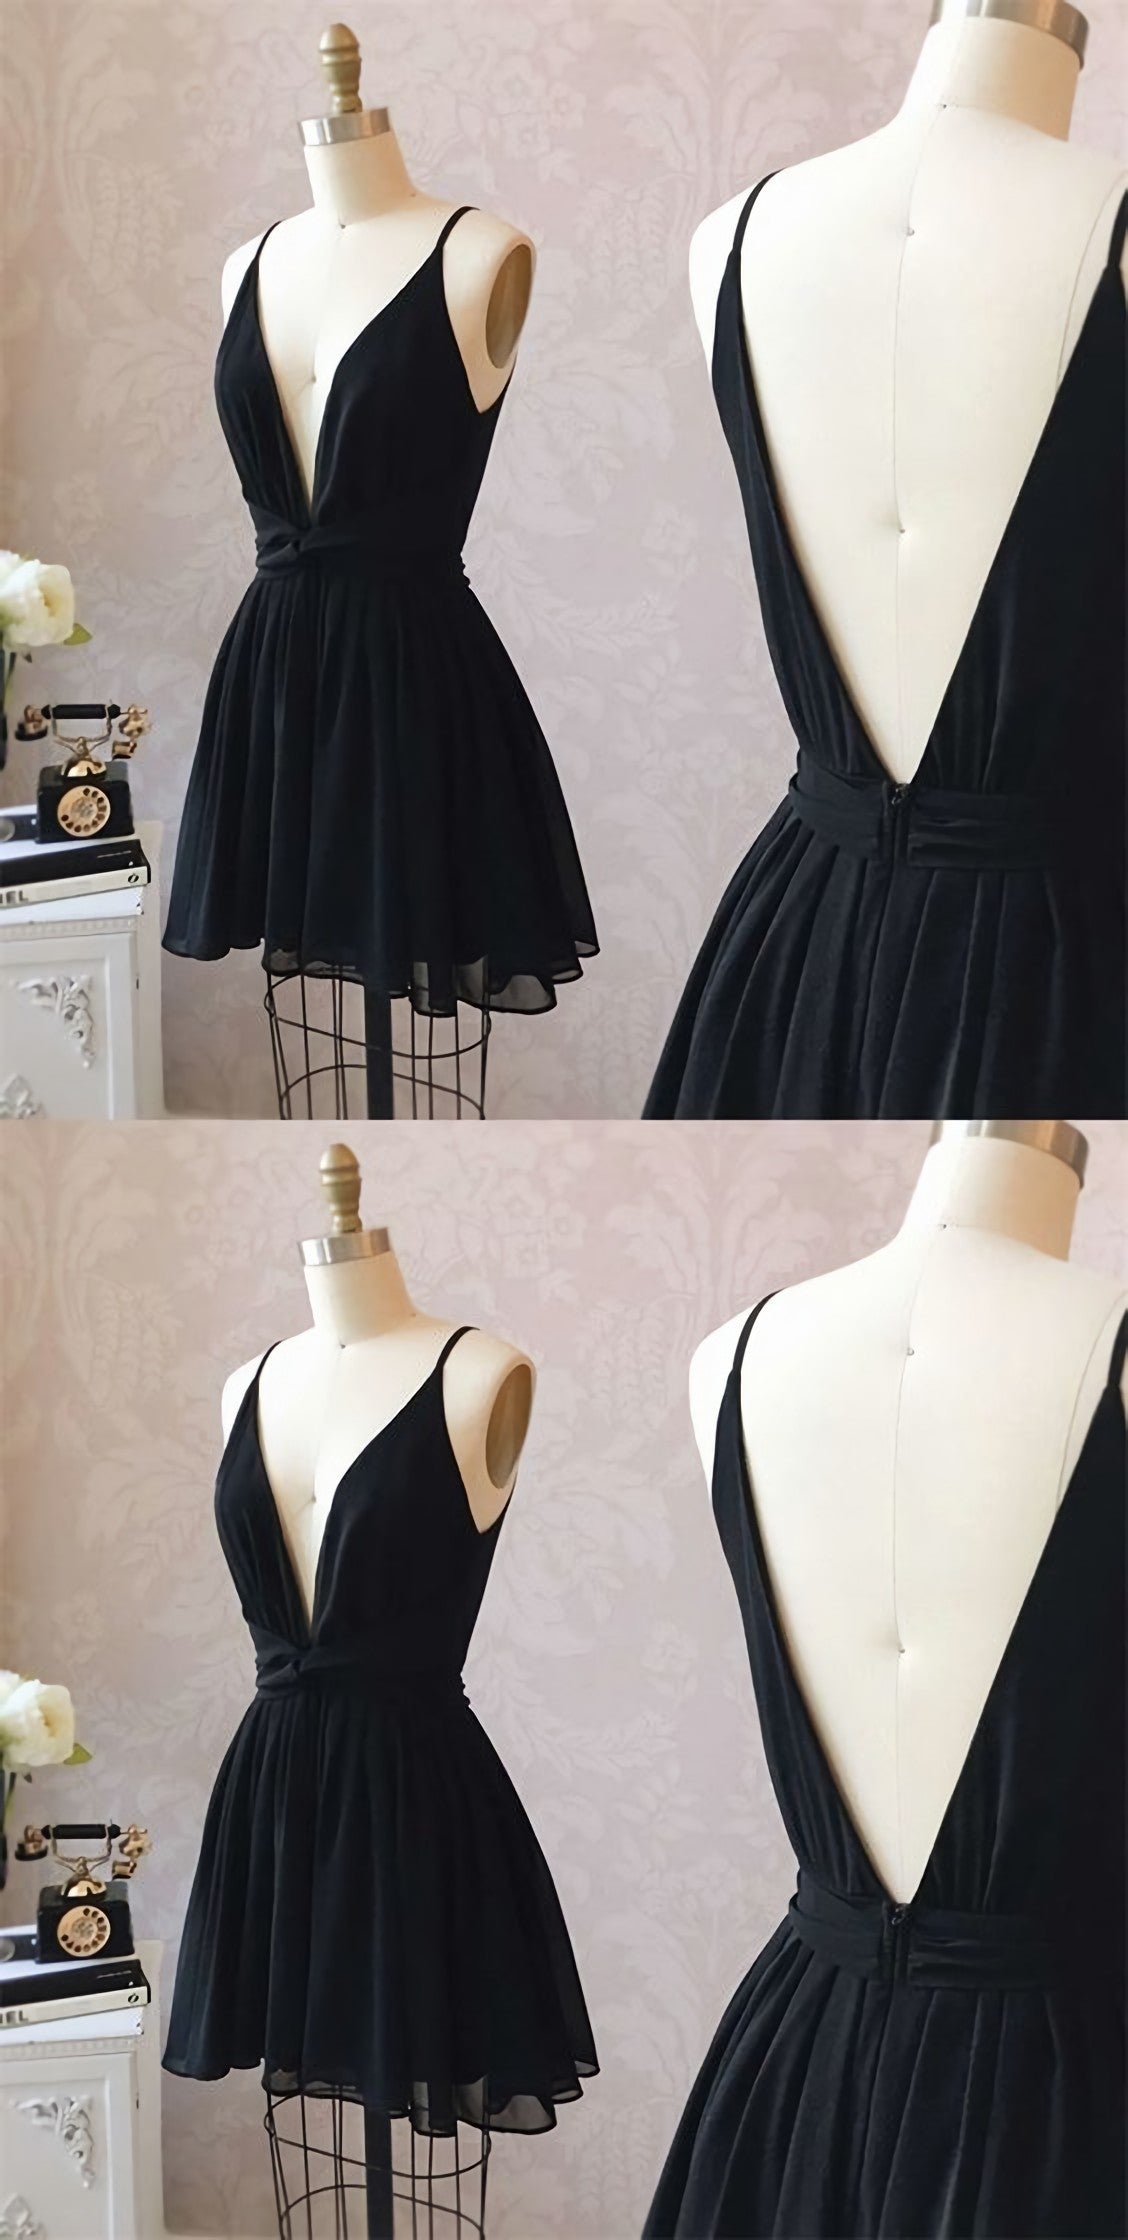 Cute Black V Neck Corset Homecoming Dress, Short Black Corset Formal Dress, Party Dress, 5950 Gowns, Formal Dresses Long Elegant Evening Gowns